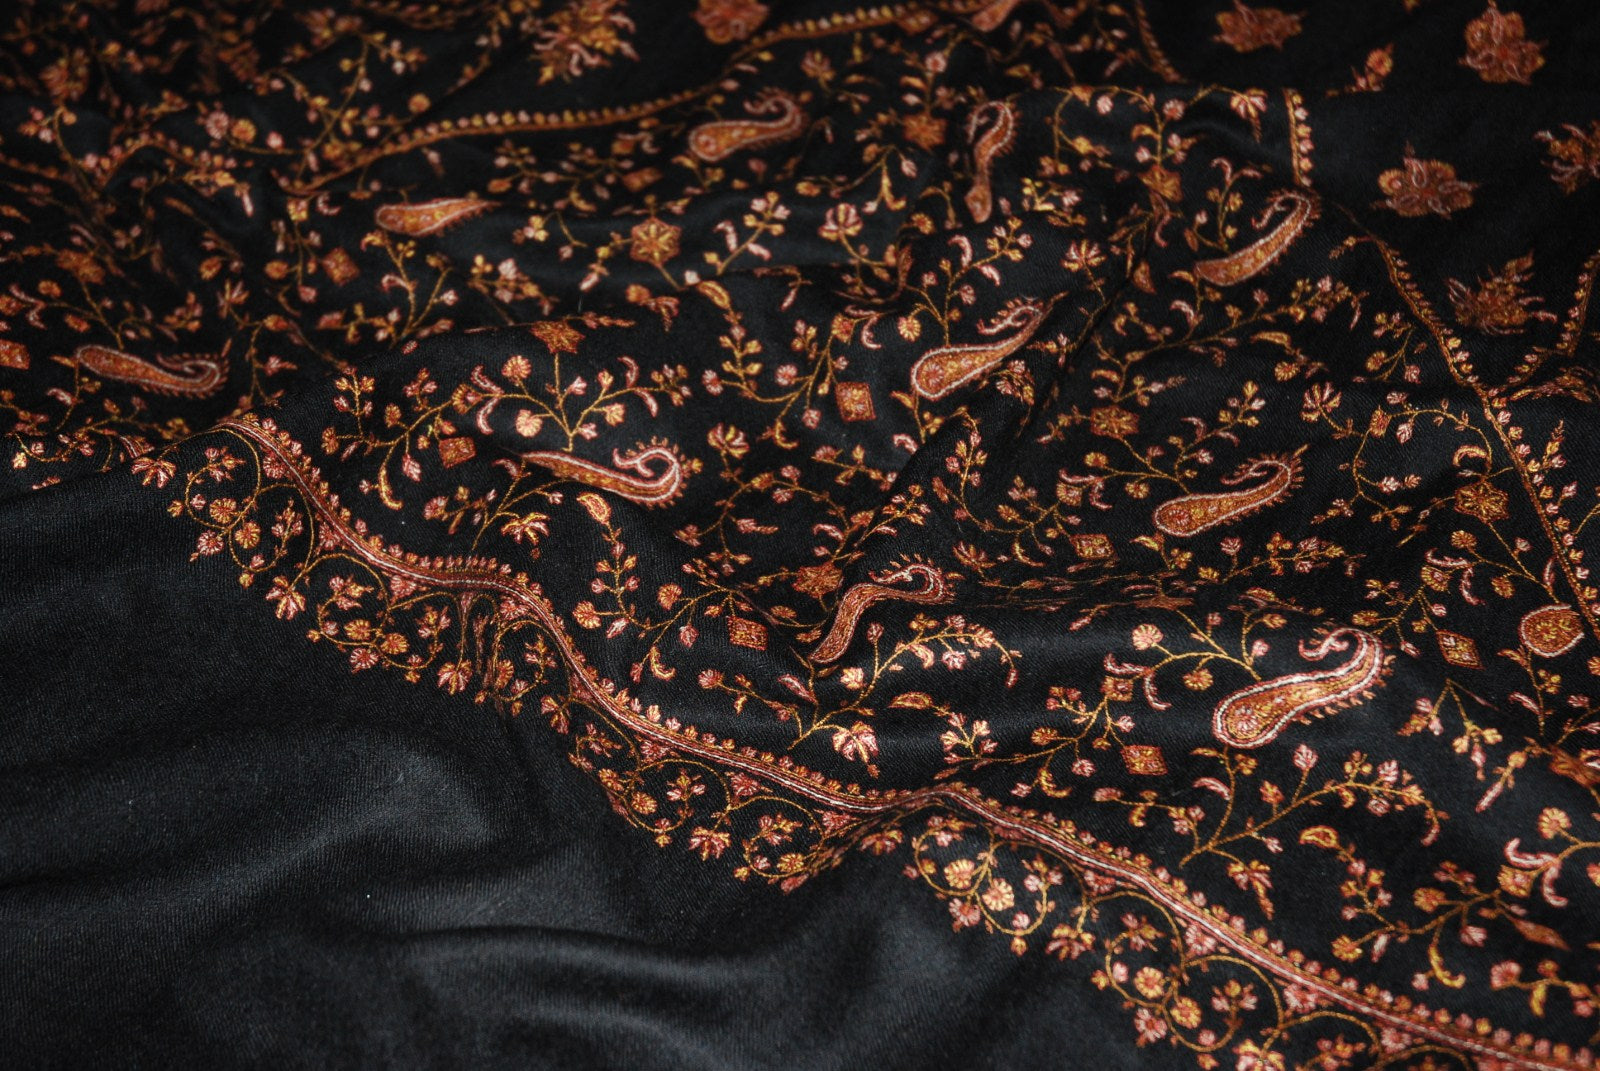 Multicolor Embroidery Handloom Pashmina "Cashmere" Shawl Black #PJL-003